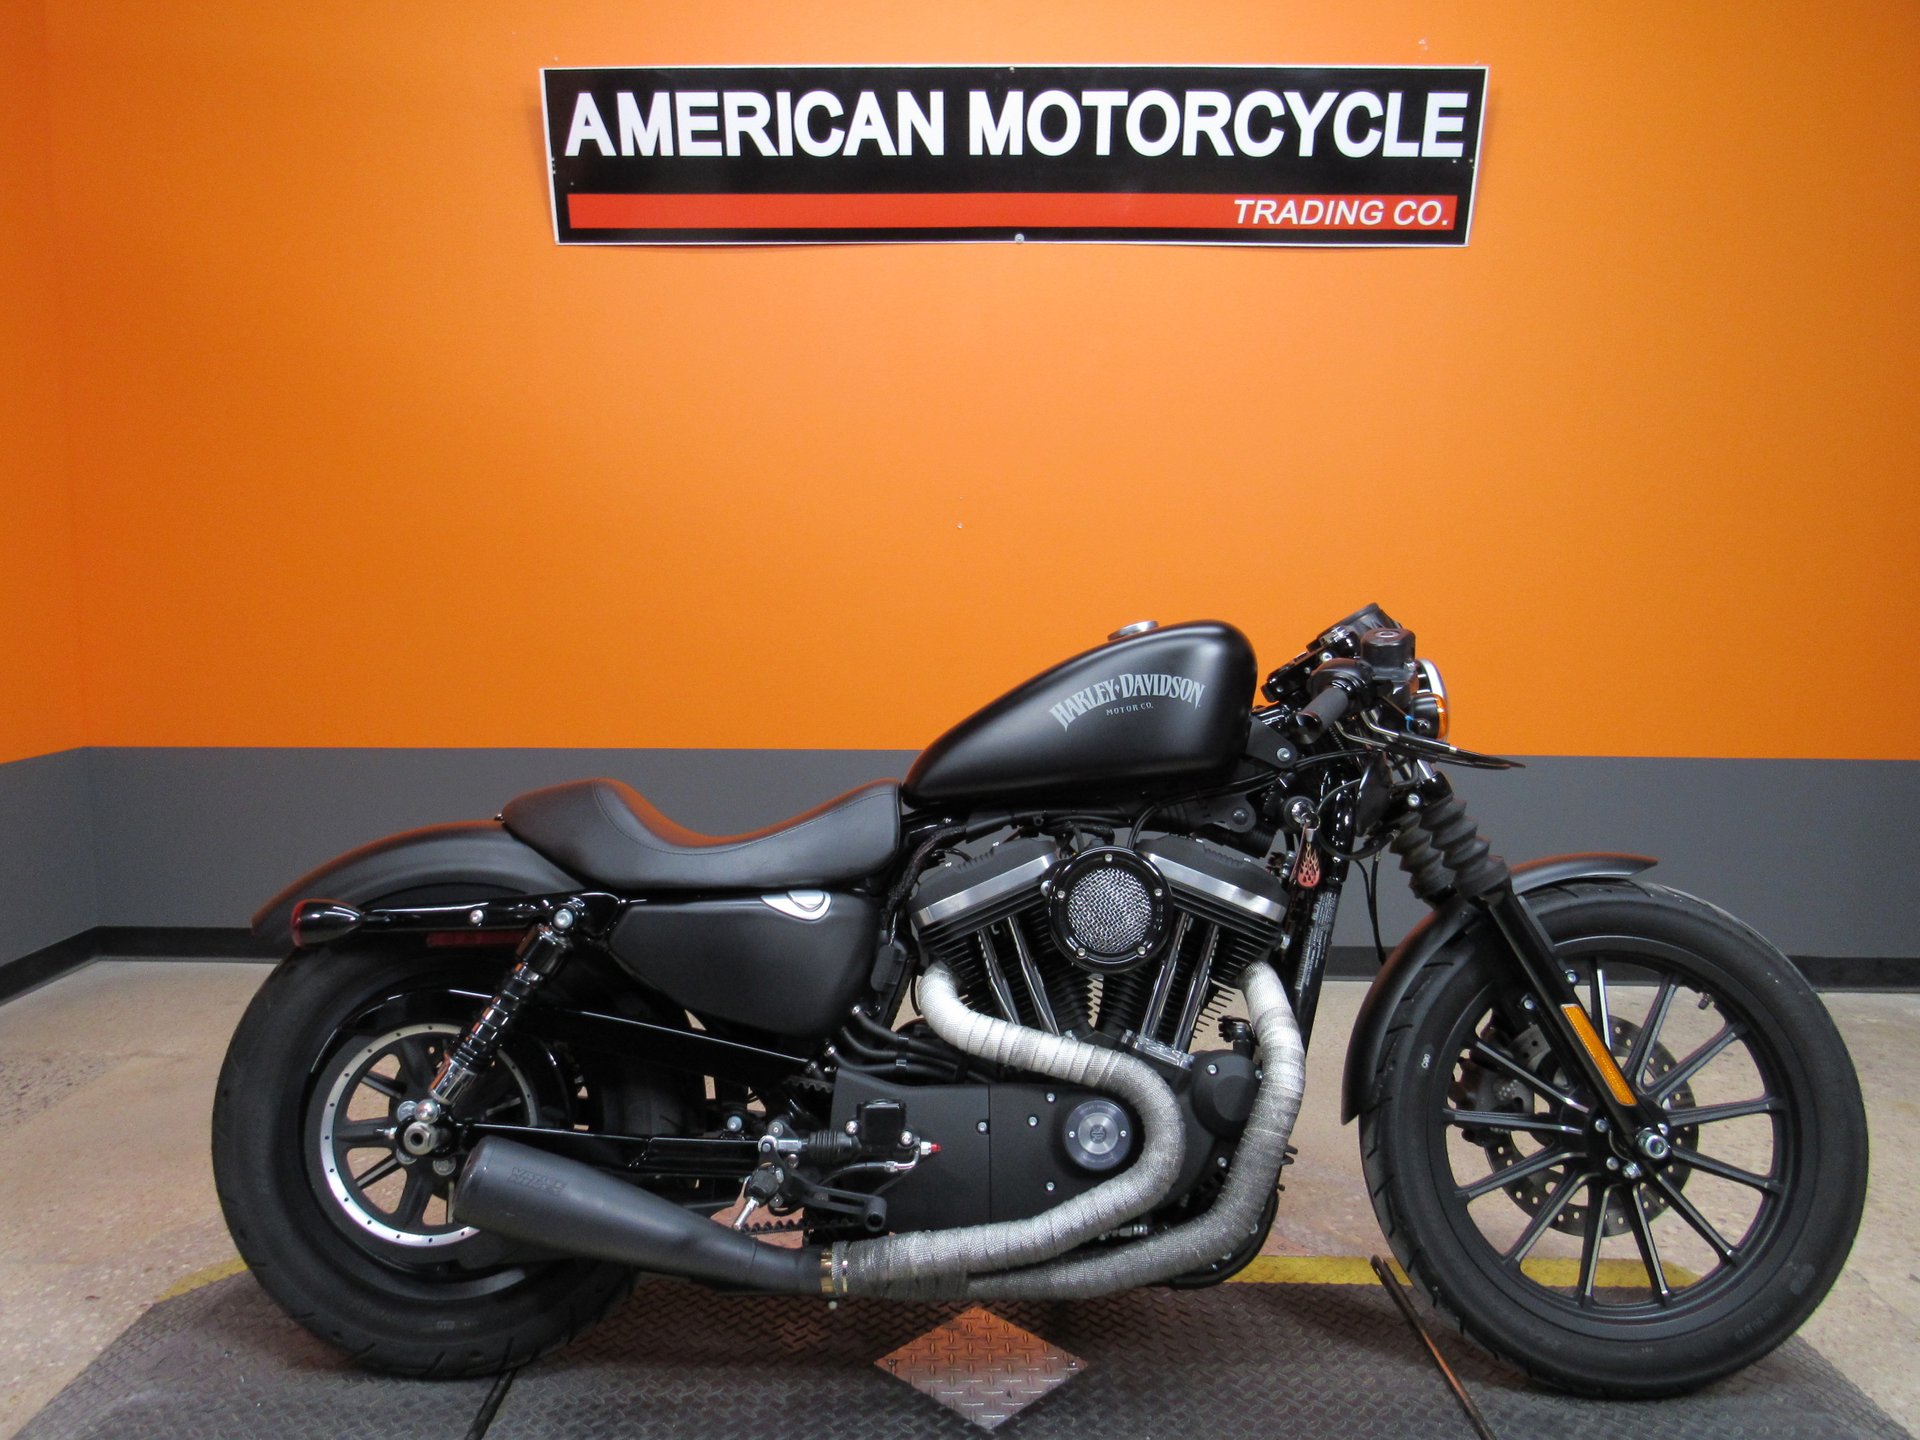 2015 Harley-Davidson Sportster 883 | American Motorcycle Trading Company -  Used Harley Davidson Motorcycles